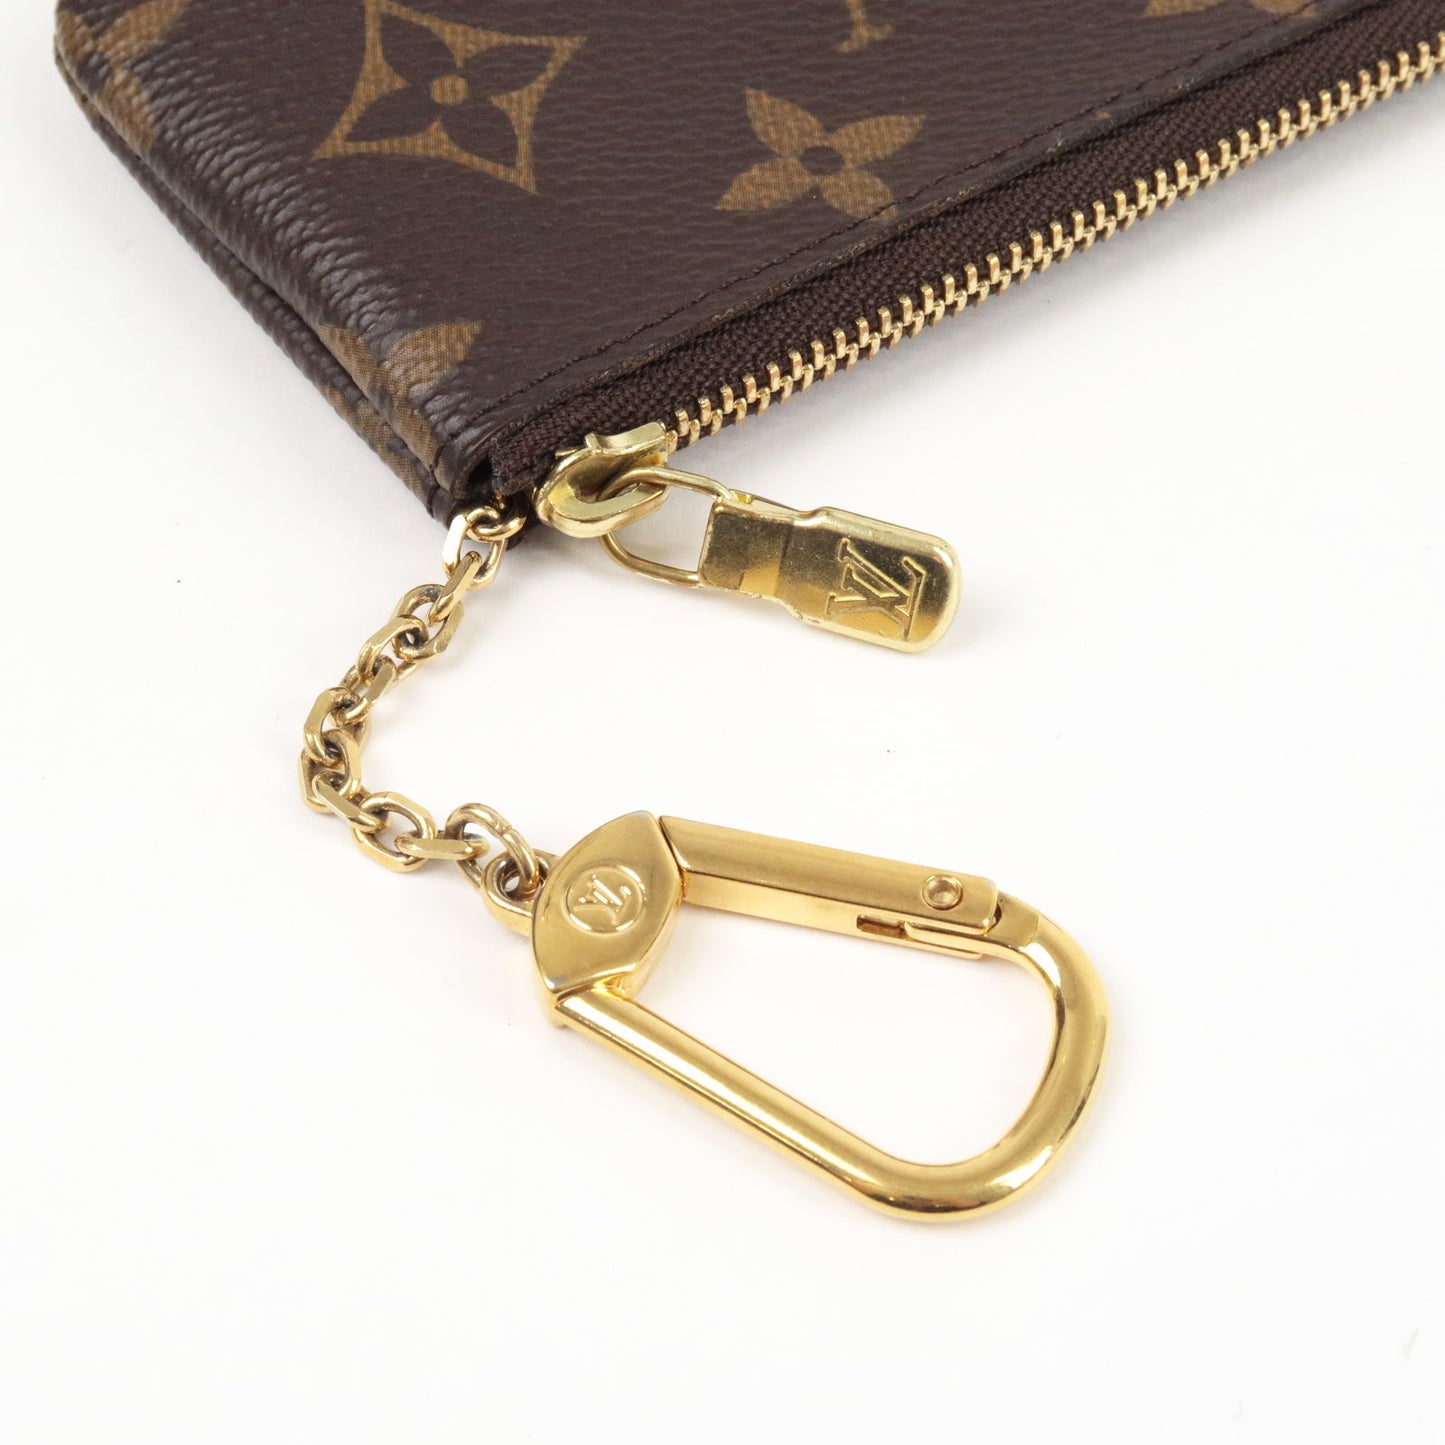 LOUIS VUITTON LOUIS VUITTON Pochette Cle key holder case purse M62650  Monogram canvas used M62650｜Product Code：2118500035786｜BRAND OFF Online  Store